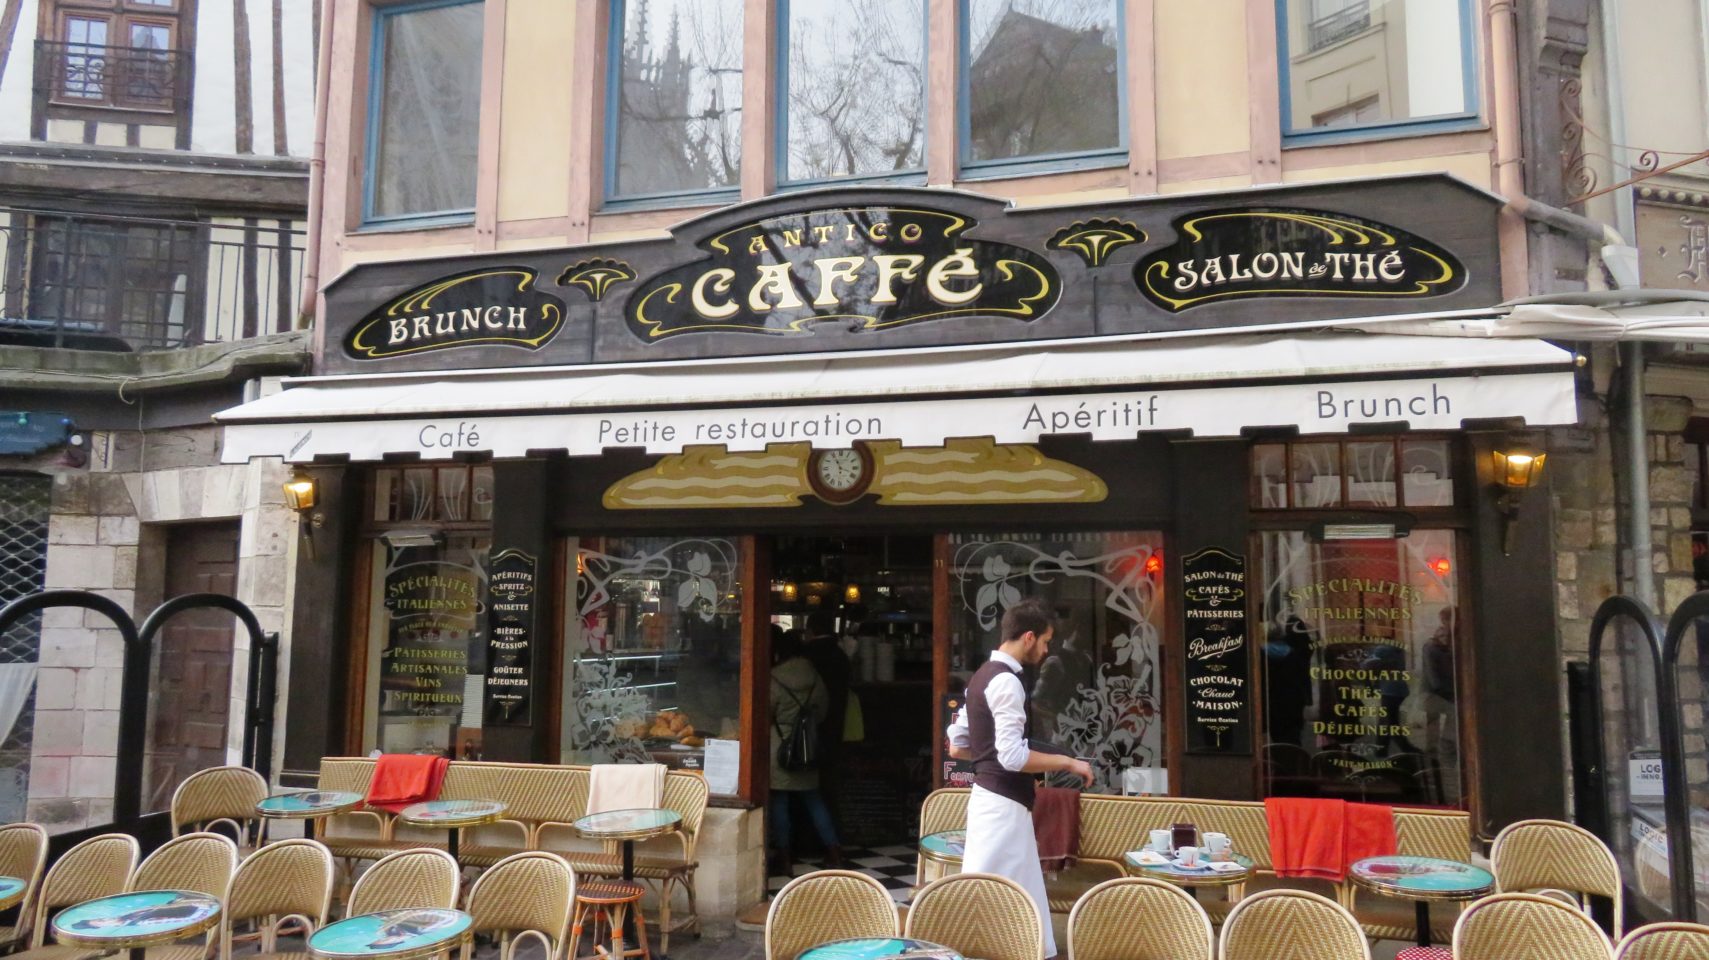 Antico Caffe in Rouen, Normandie, France (Paris and Normandie AMAWaterways Cruise)